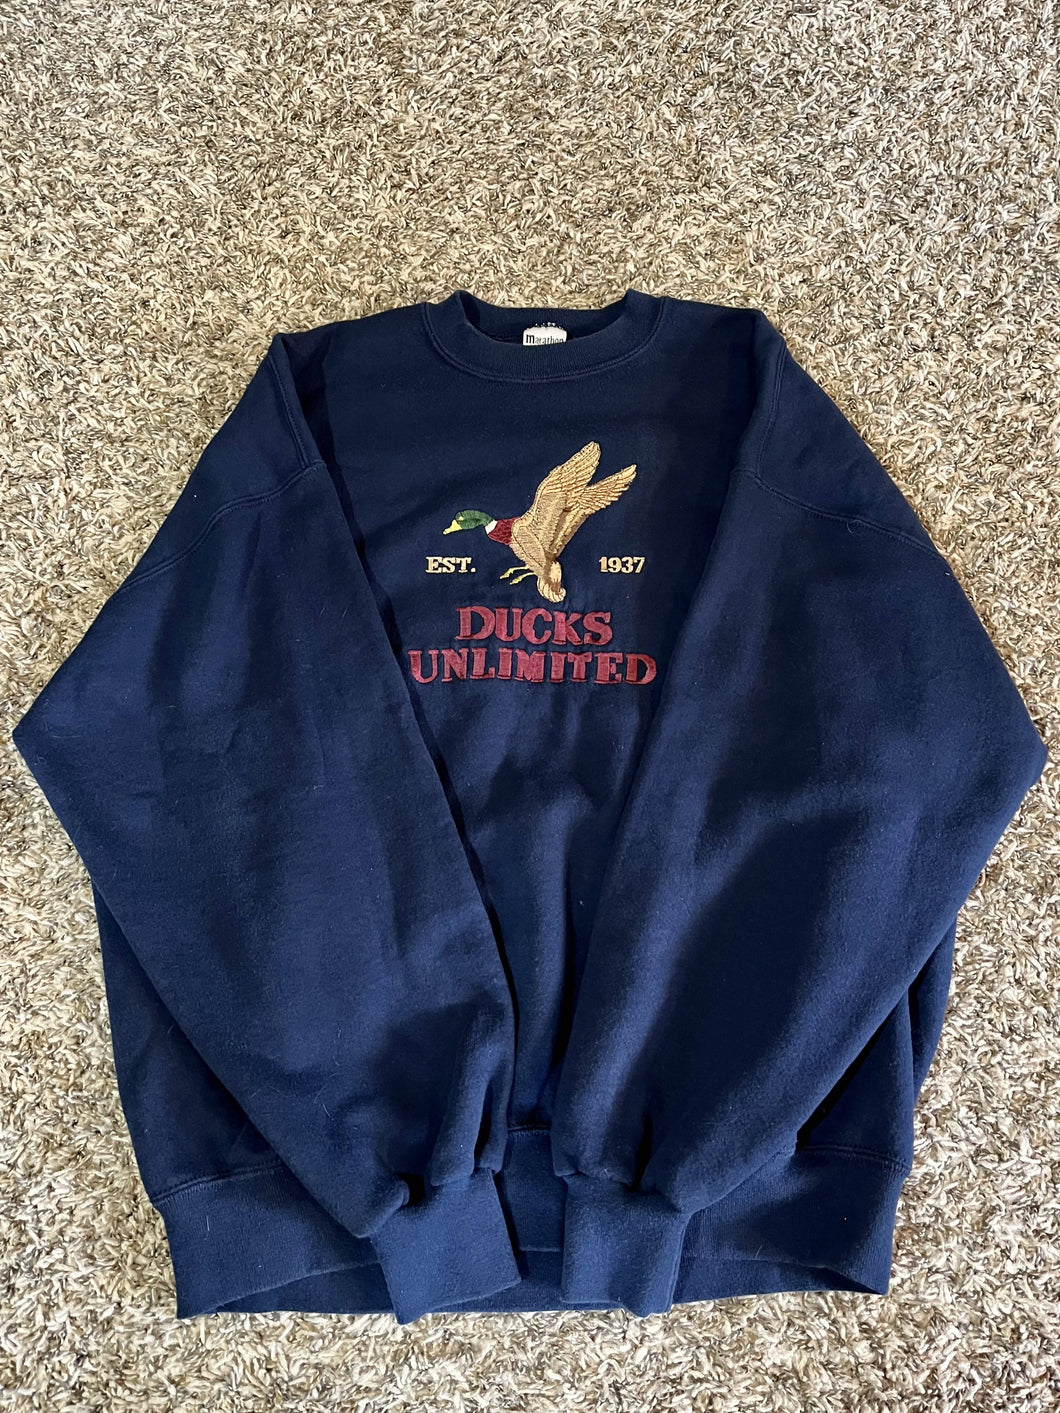 Vintage Ducks Unlimited Sweatshirt XXL